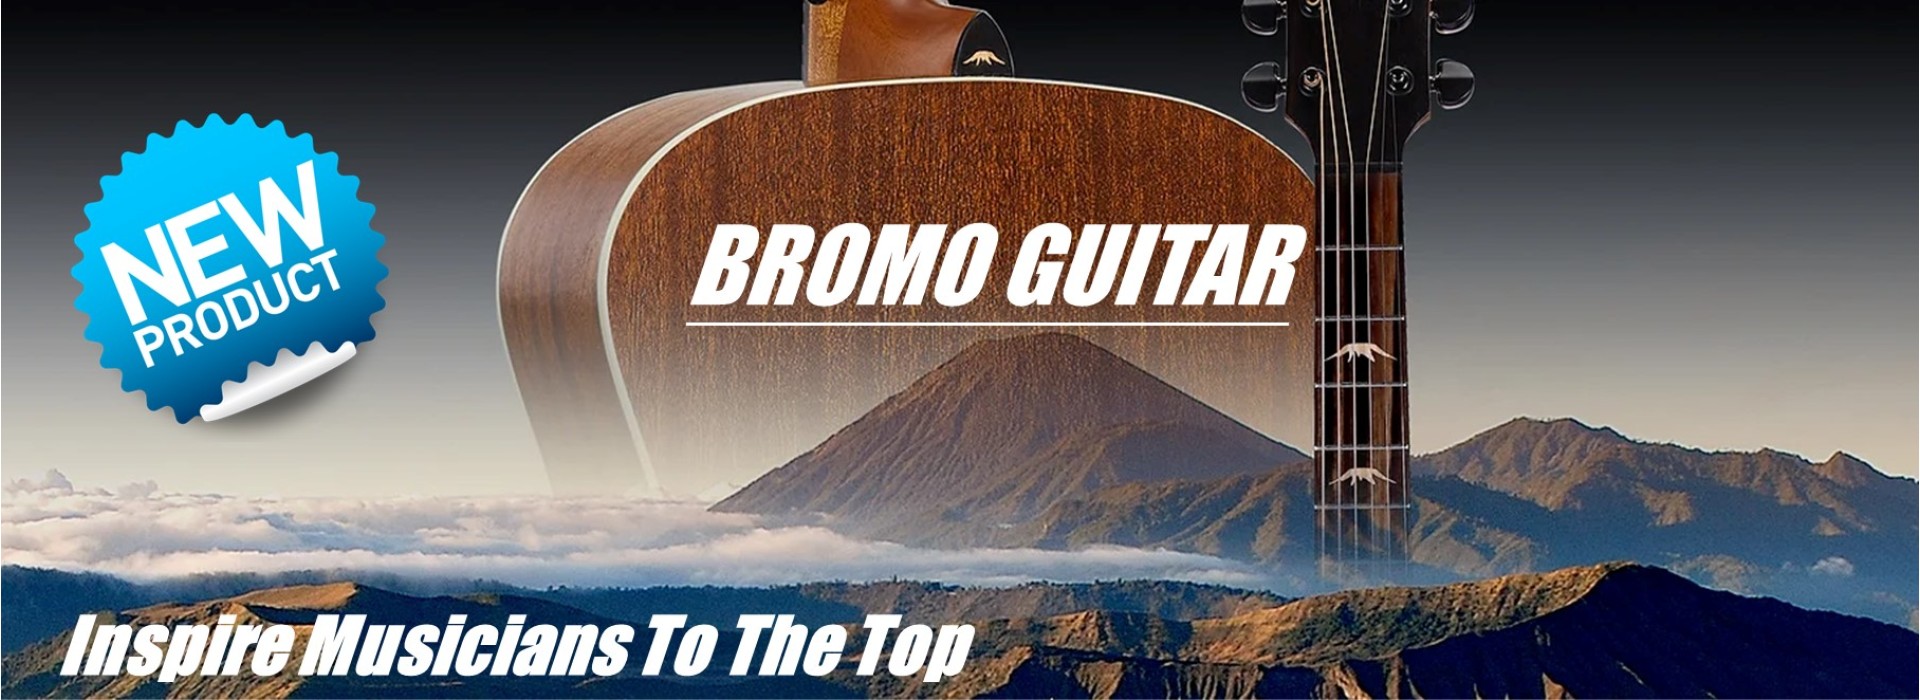 Bromo Guitar